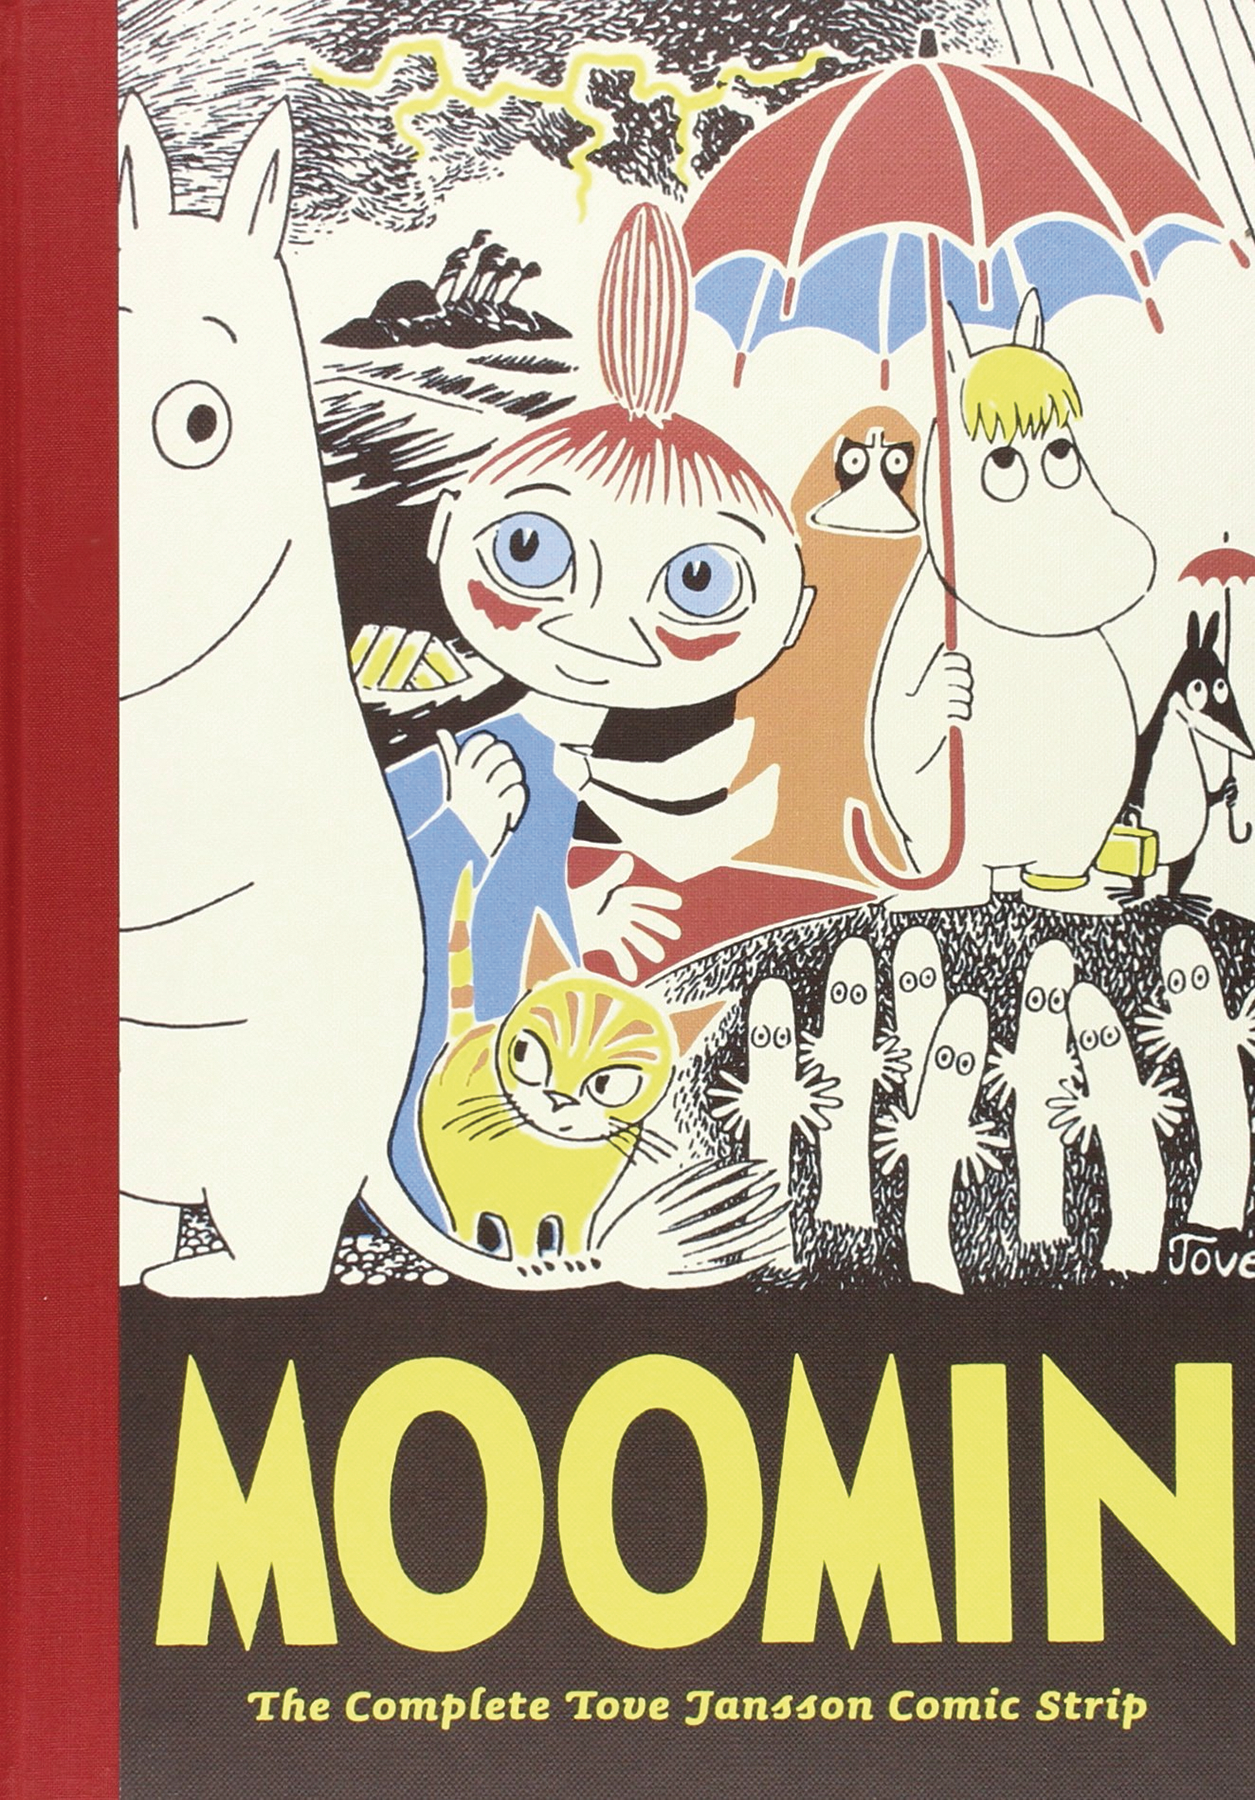 Moomin Complete Tove Jannson Comic Strip Hardcover Graphic Novel Volume 1